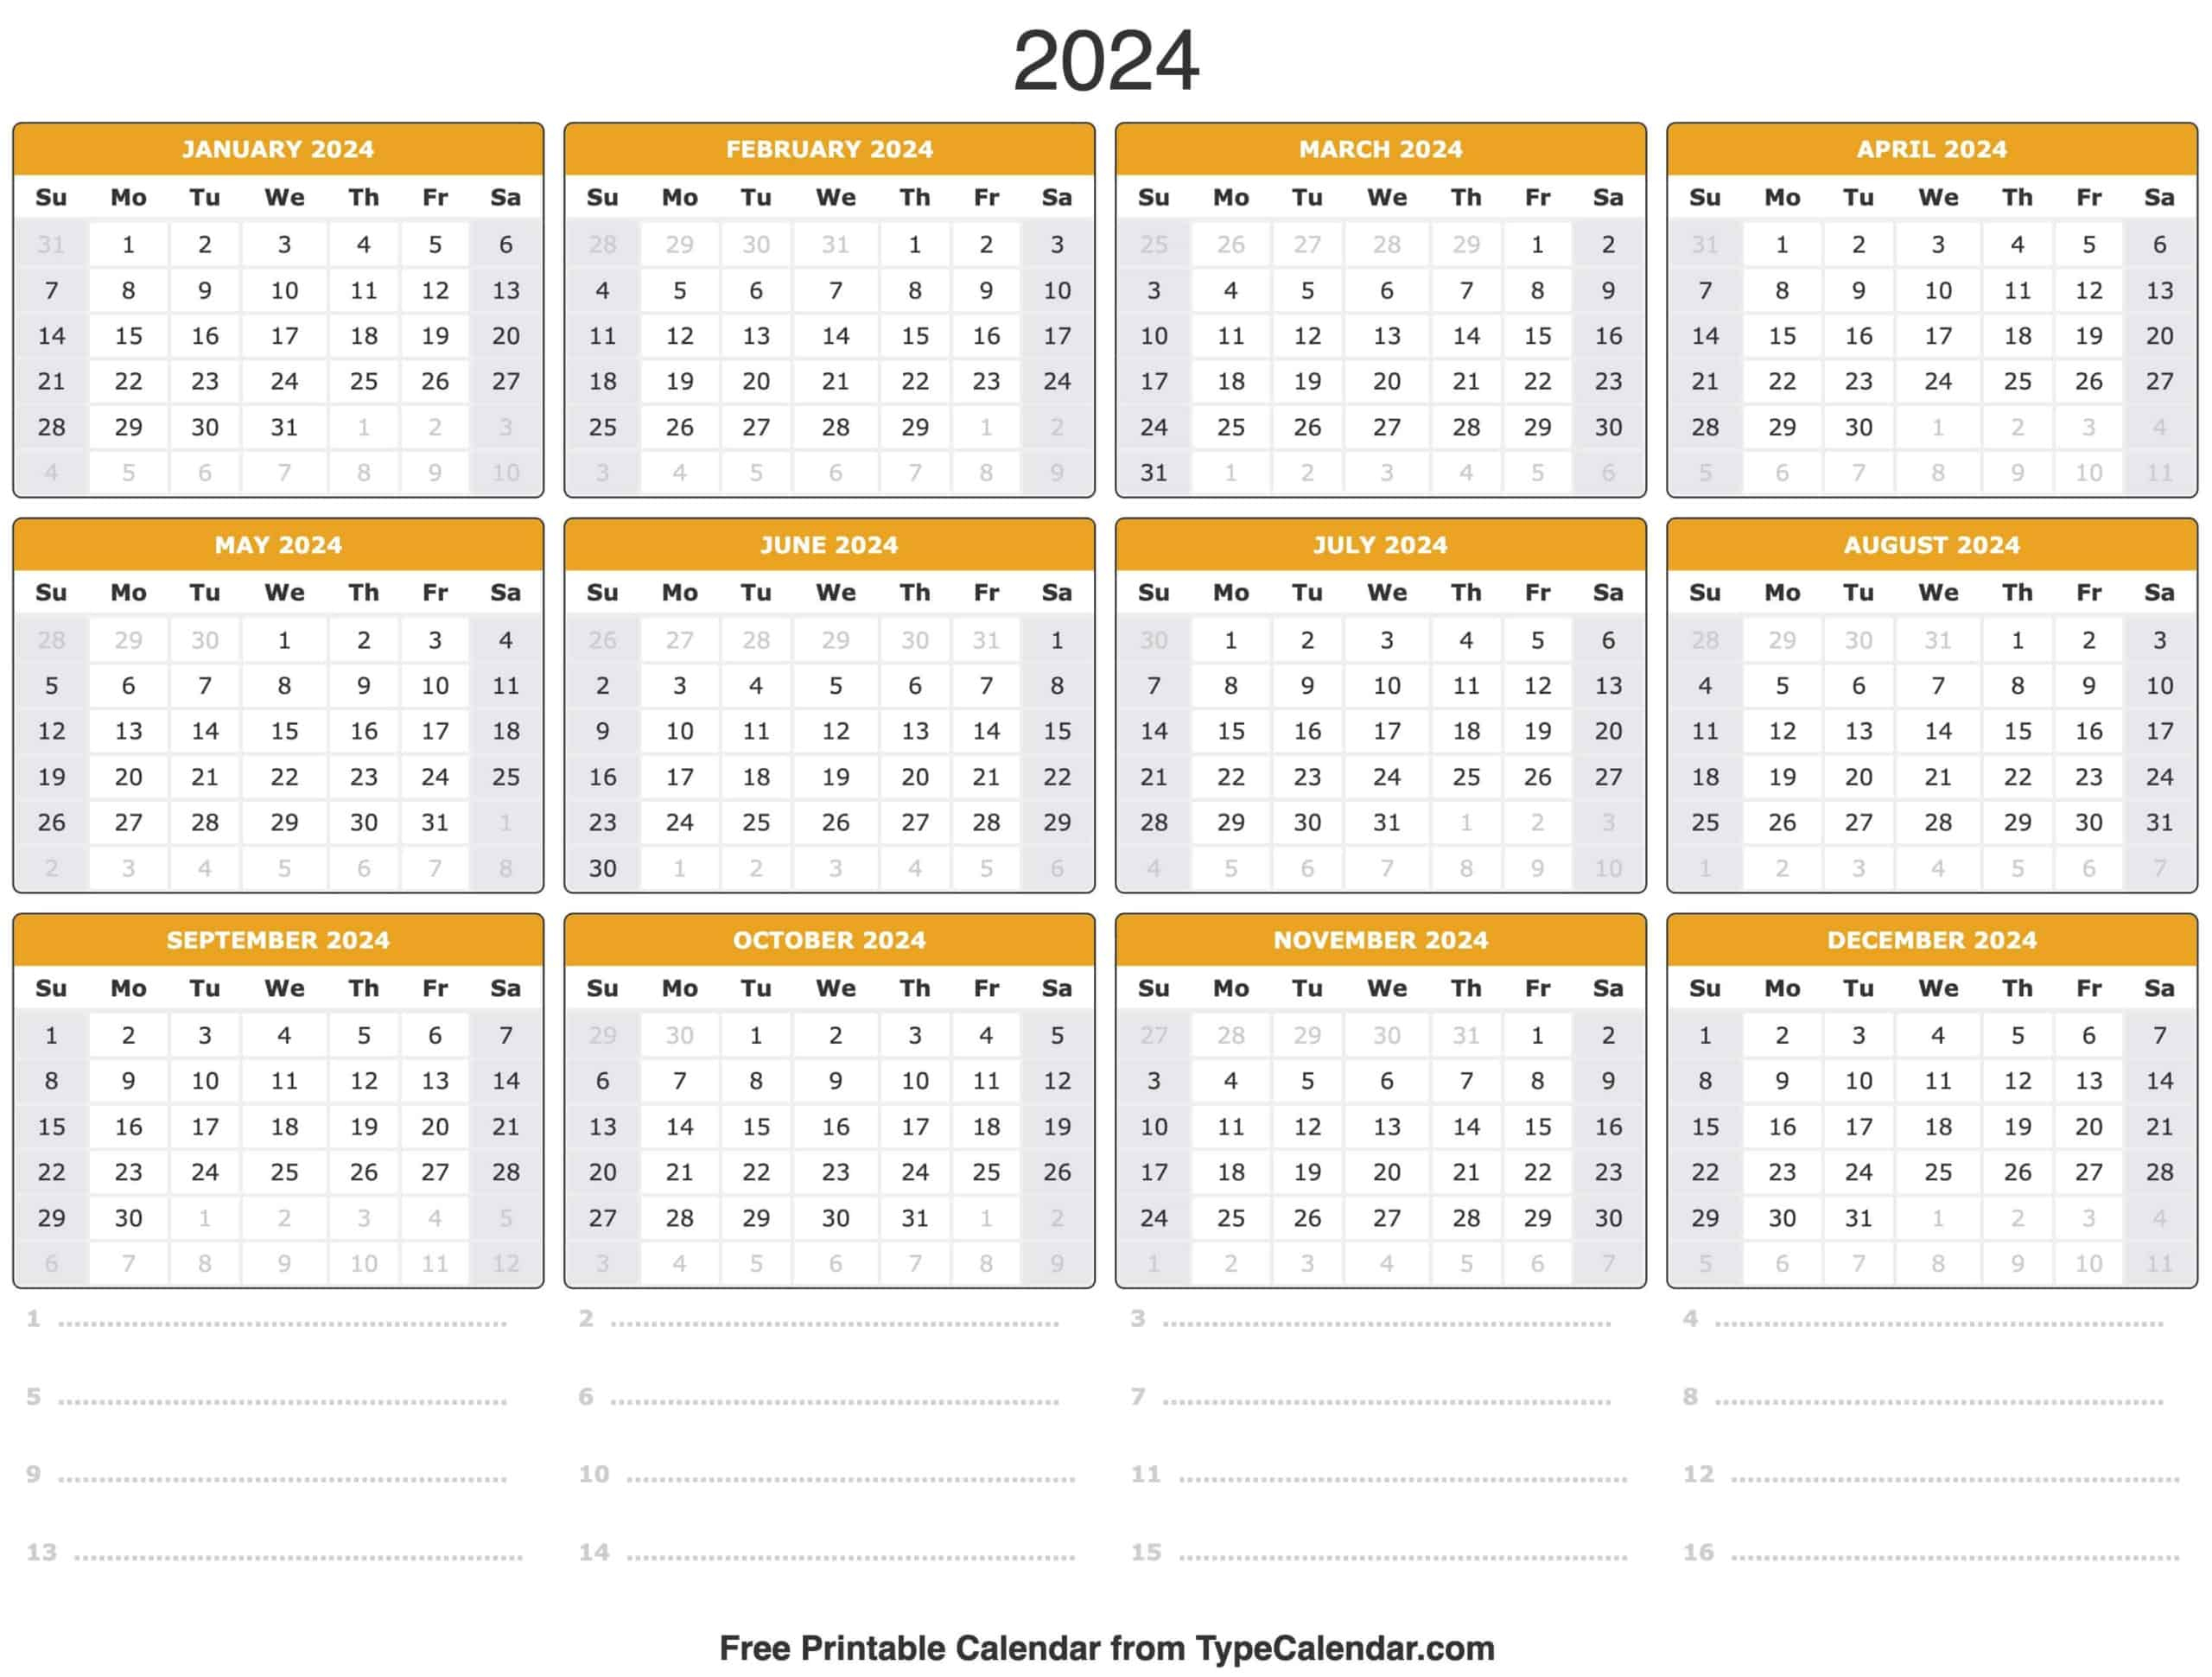 2024 Calendar: Free Printable Calendar With Holidays | 2024 Year Long Calendar